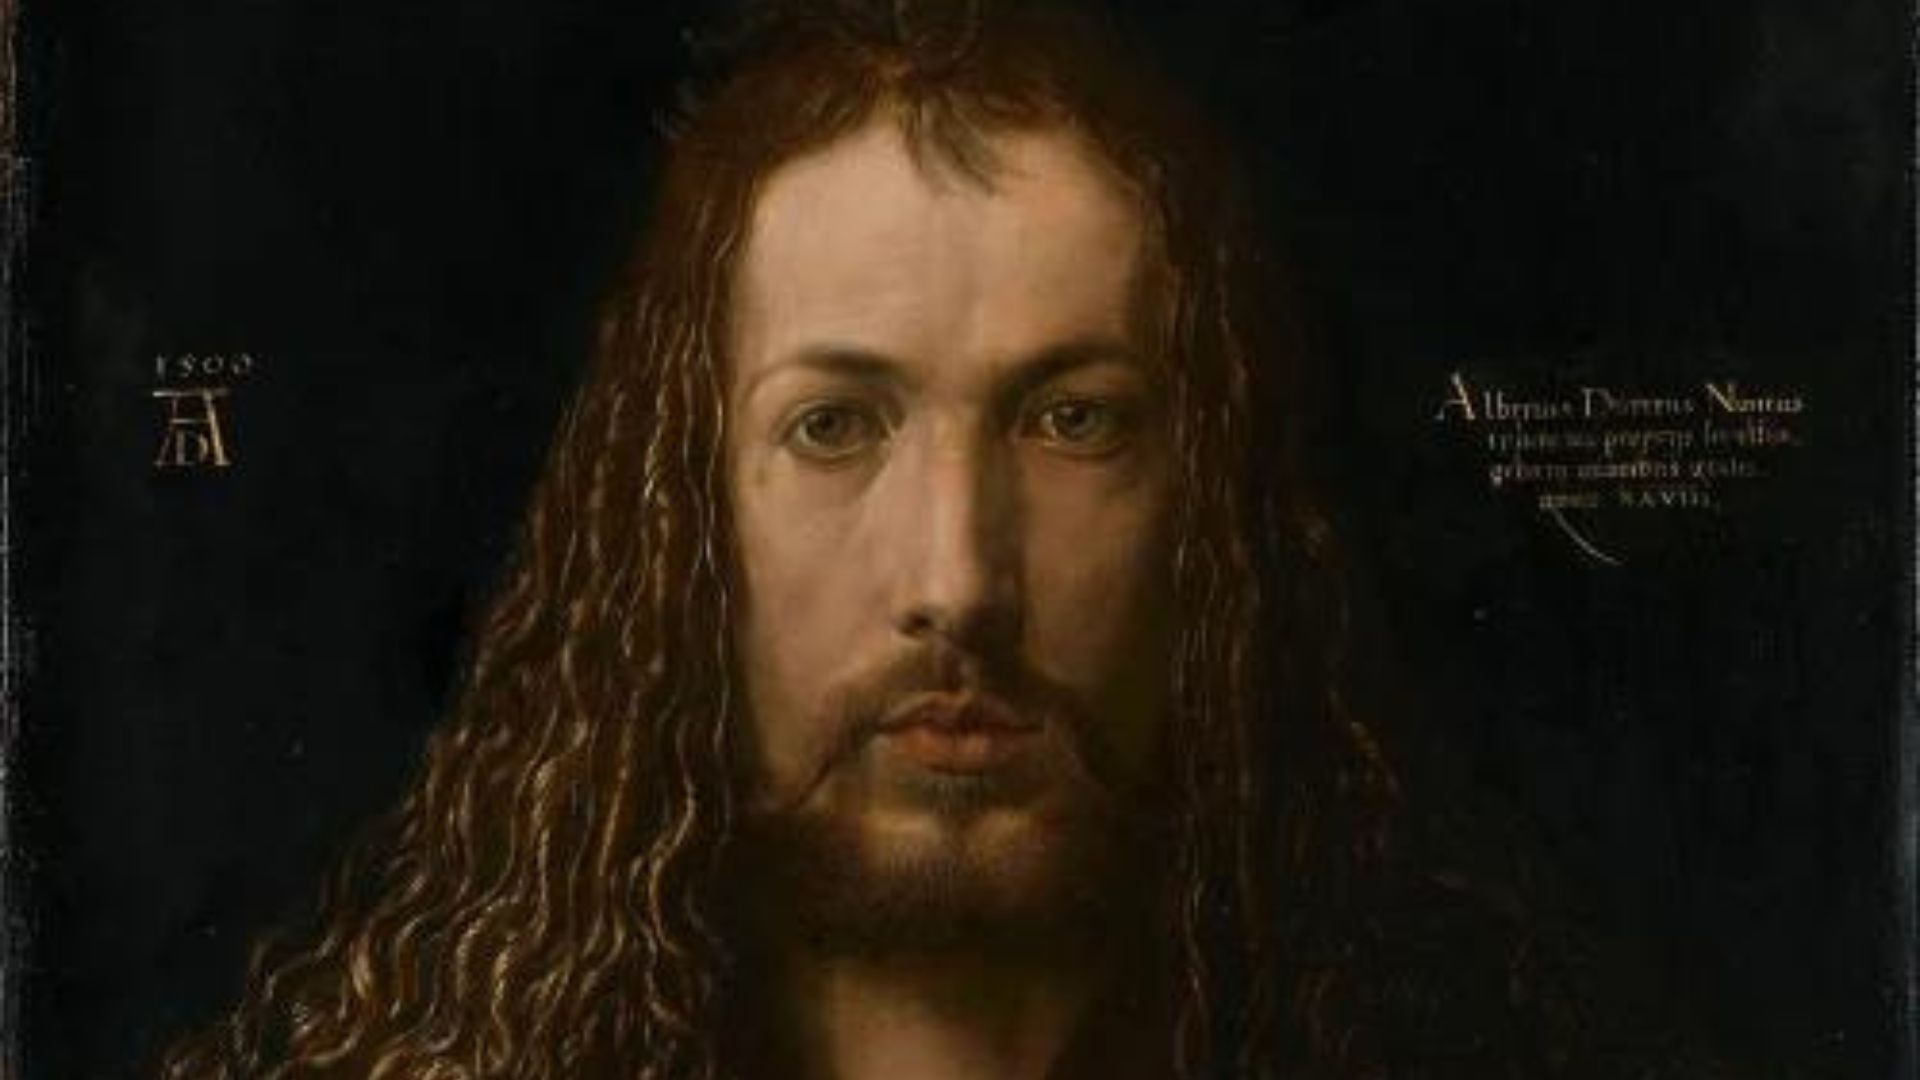 Albrecht Dürer In Front Of Black Background